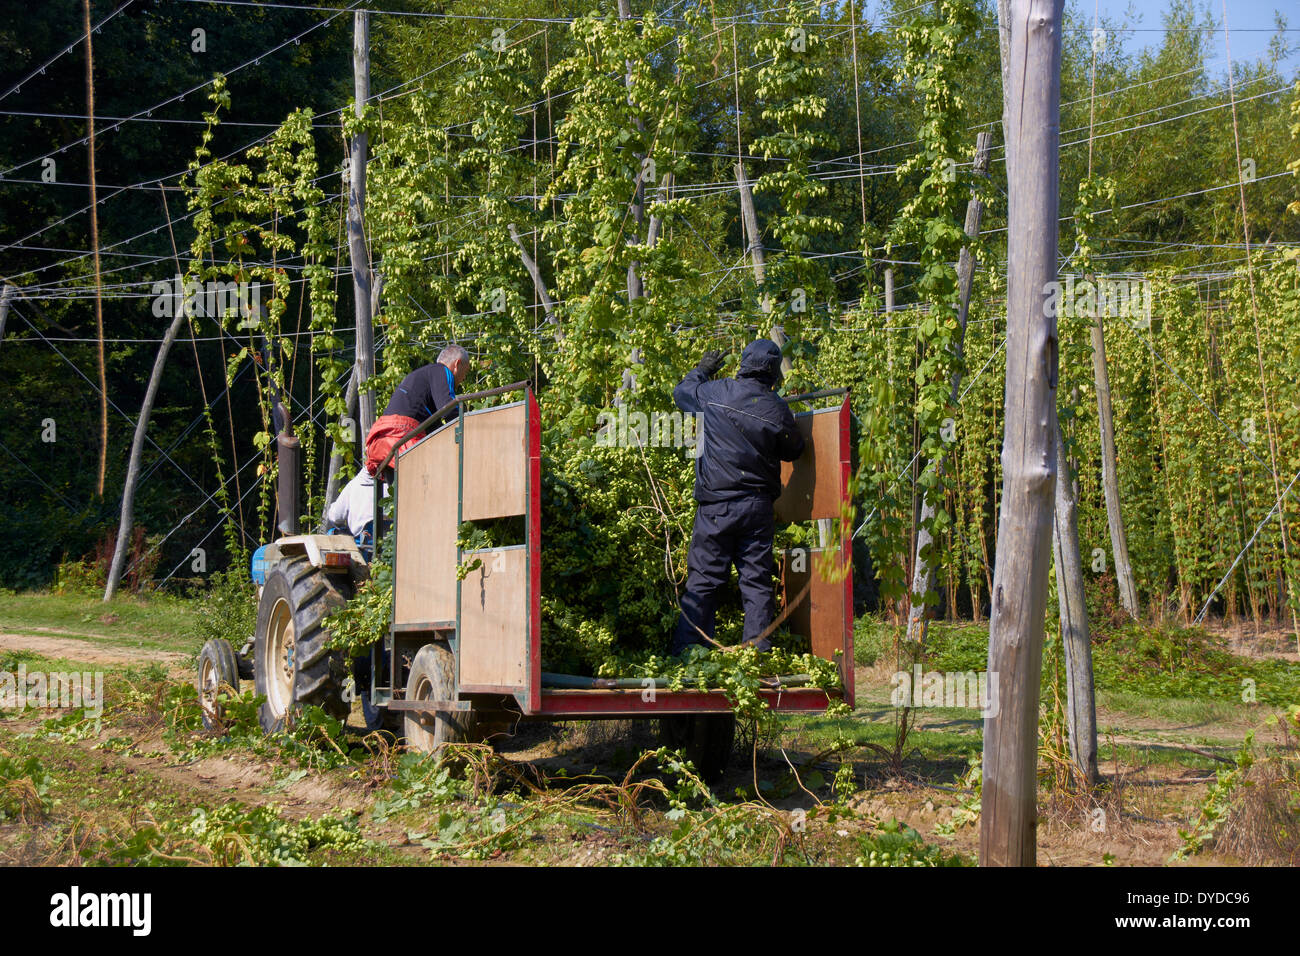 A mechanical hop picker in action in a modern hop garden. Stock Photo